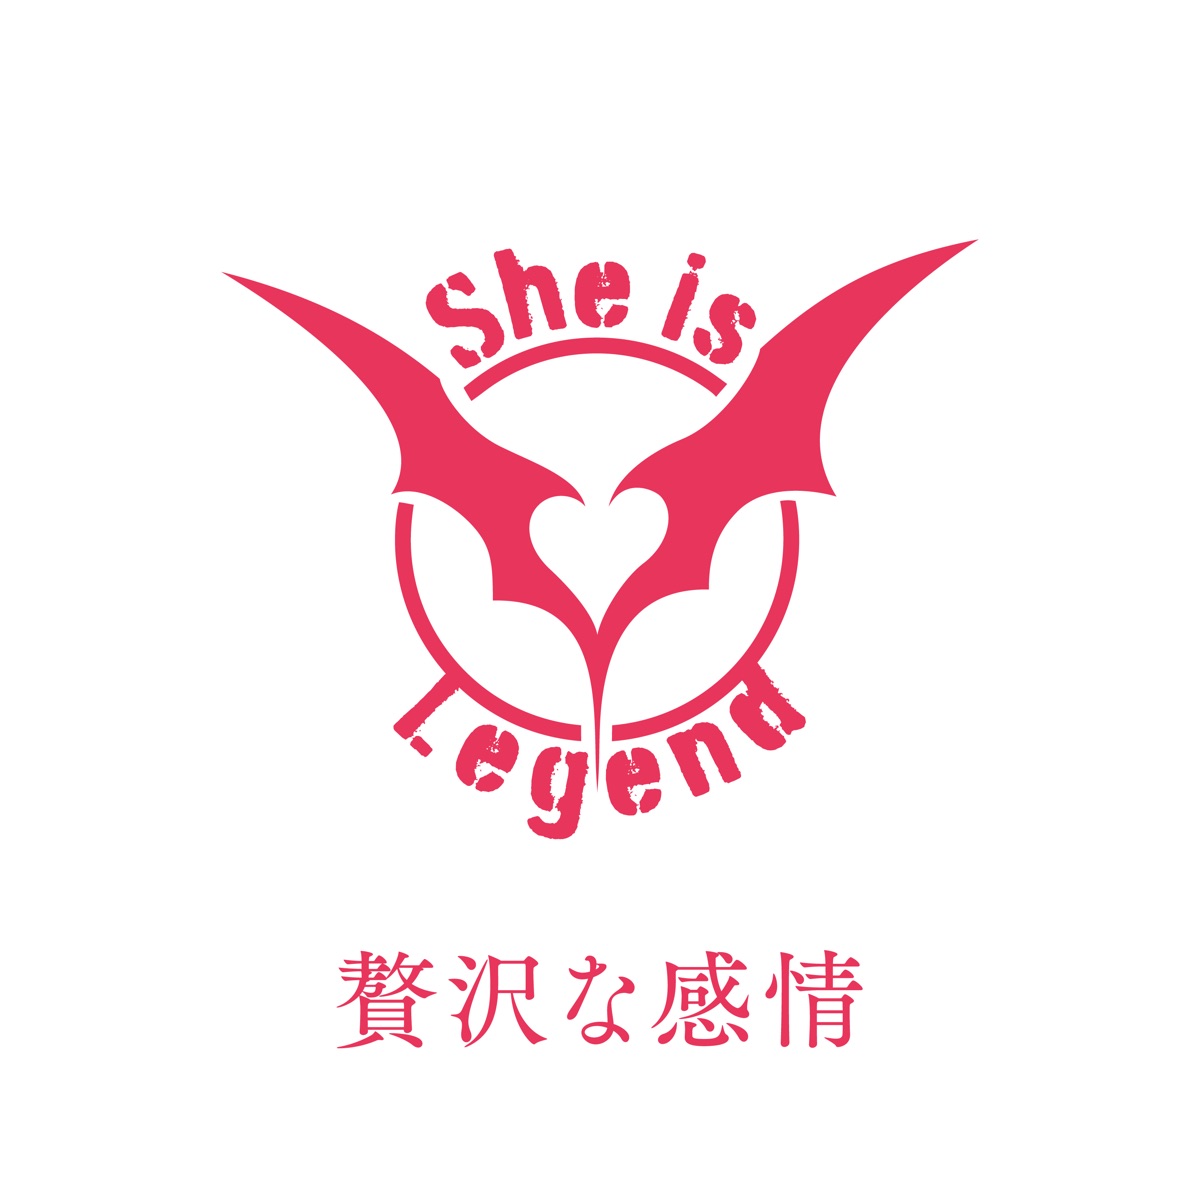 Cover art for『She is Legend - 贅沢な感情』from the release『Zeitaku na Kanjou